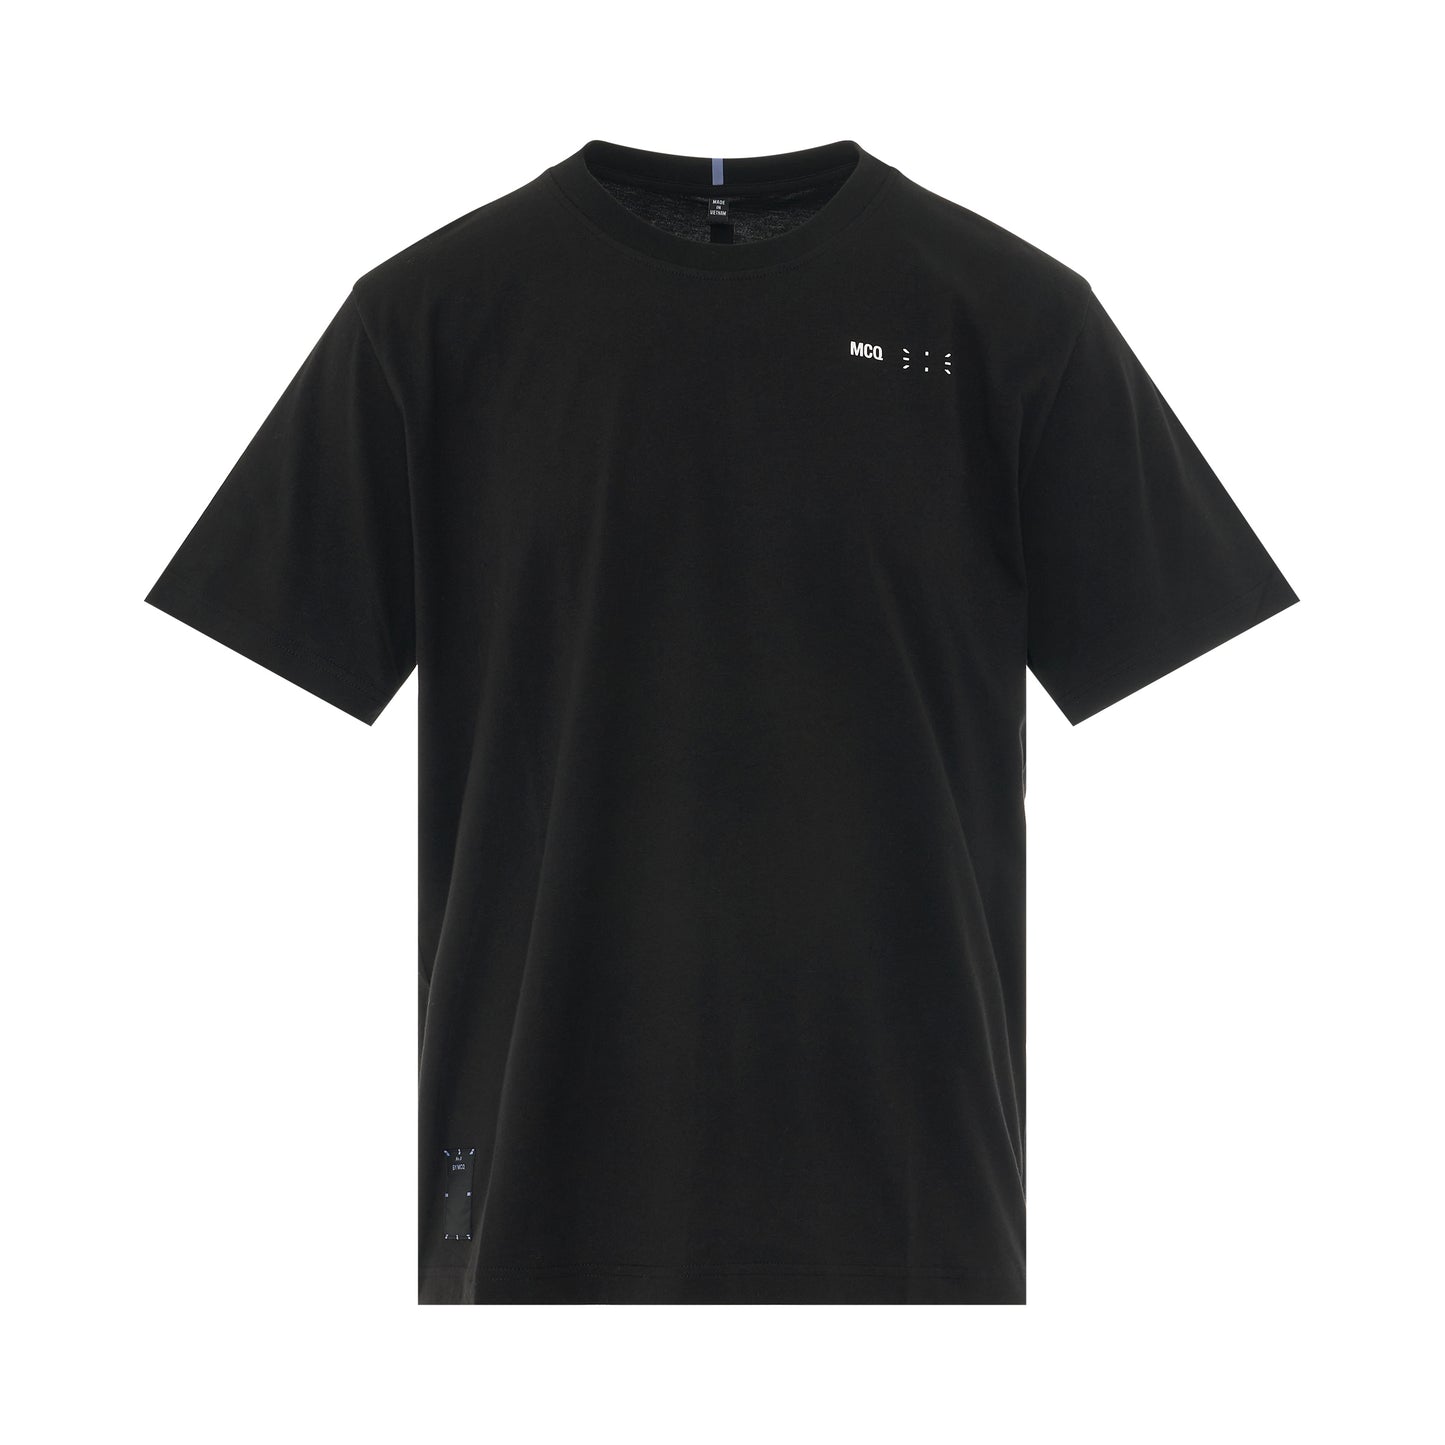 Jack Embroidered Logo T-Shirt in Black